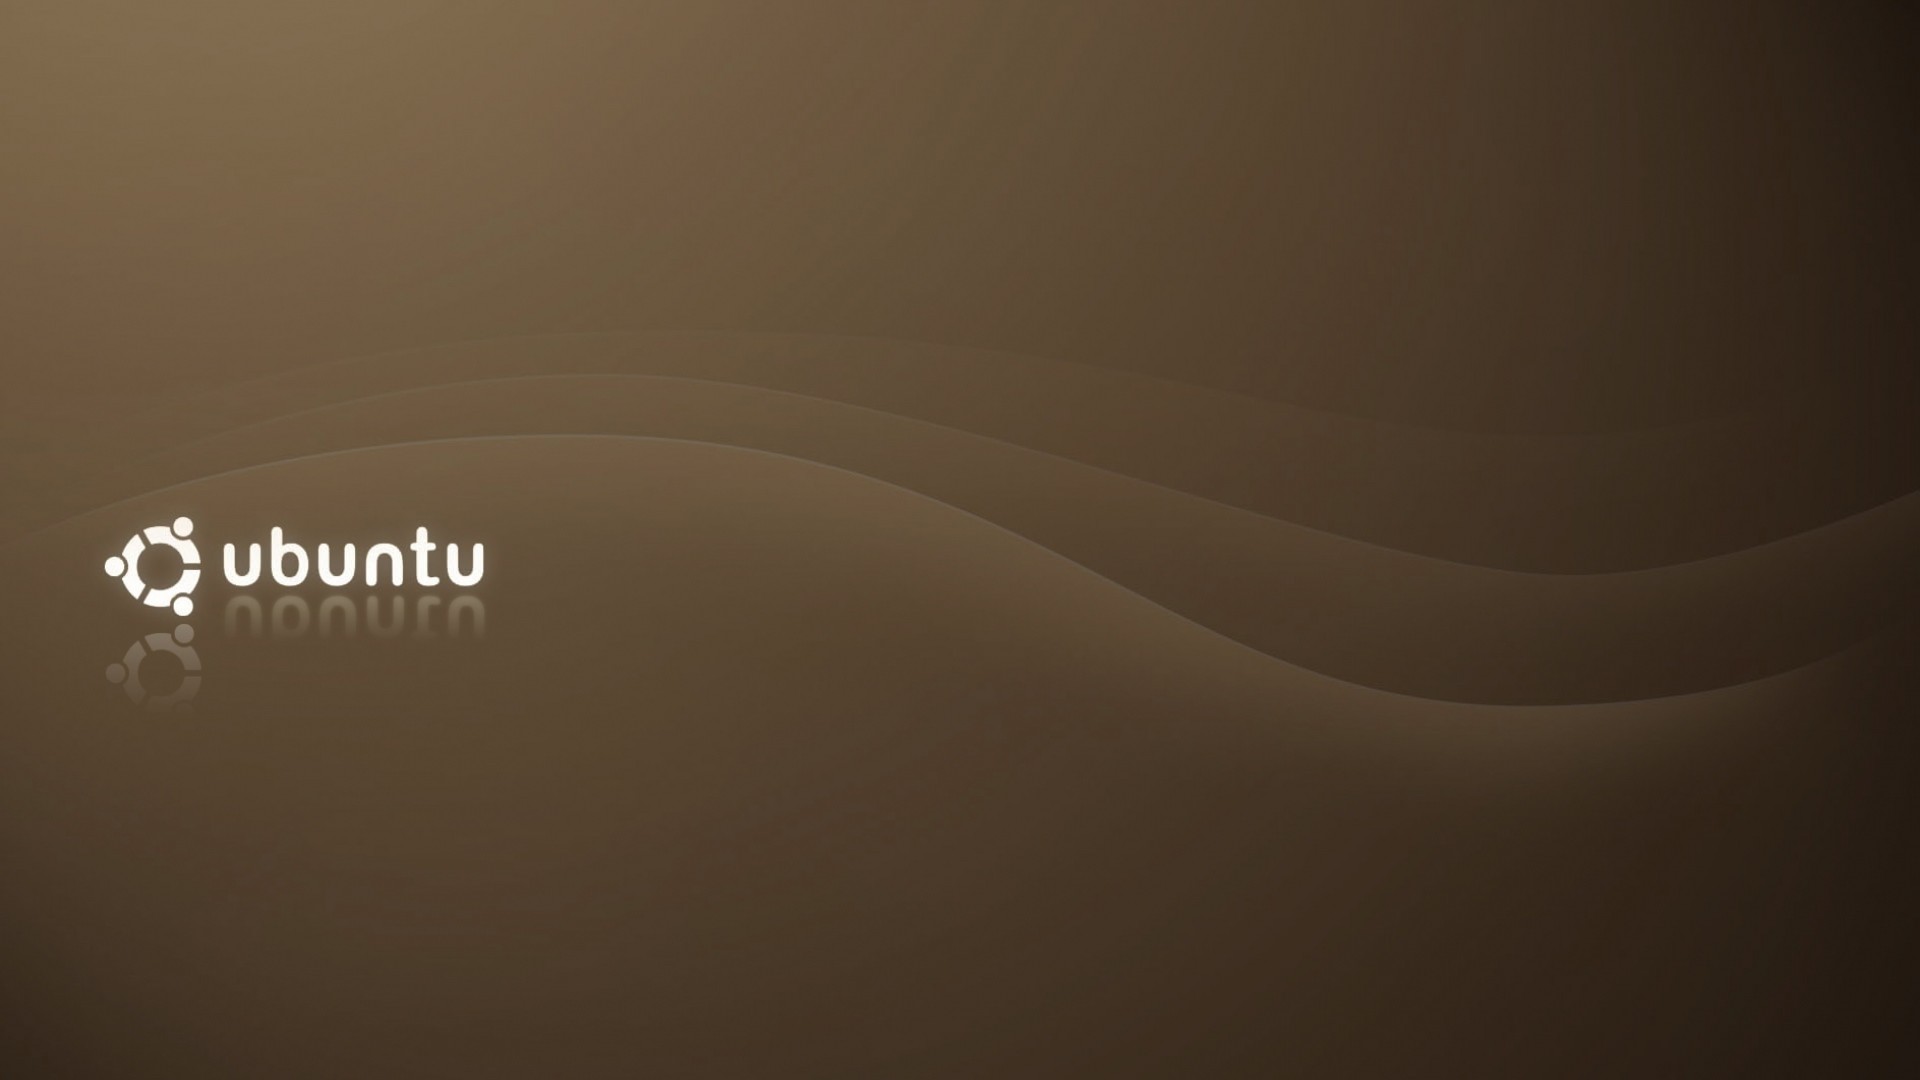 ubuntu fondo de pantalla,marrón,texto,amarillo,cielo,atmósfera